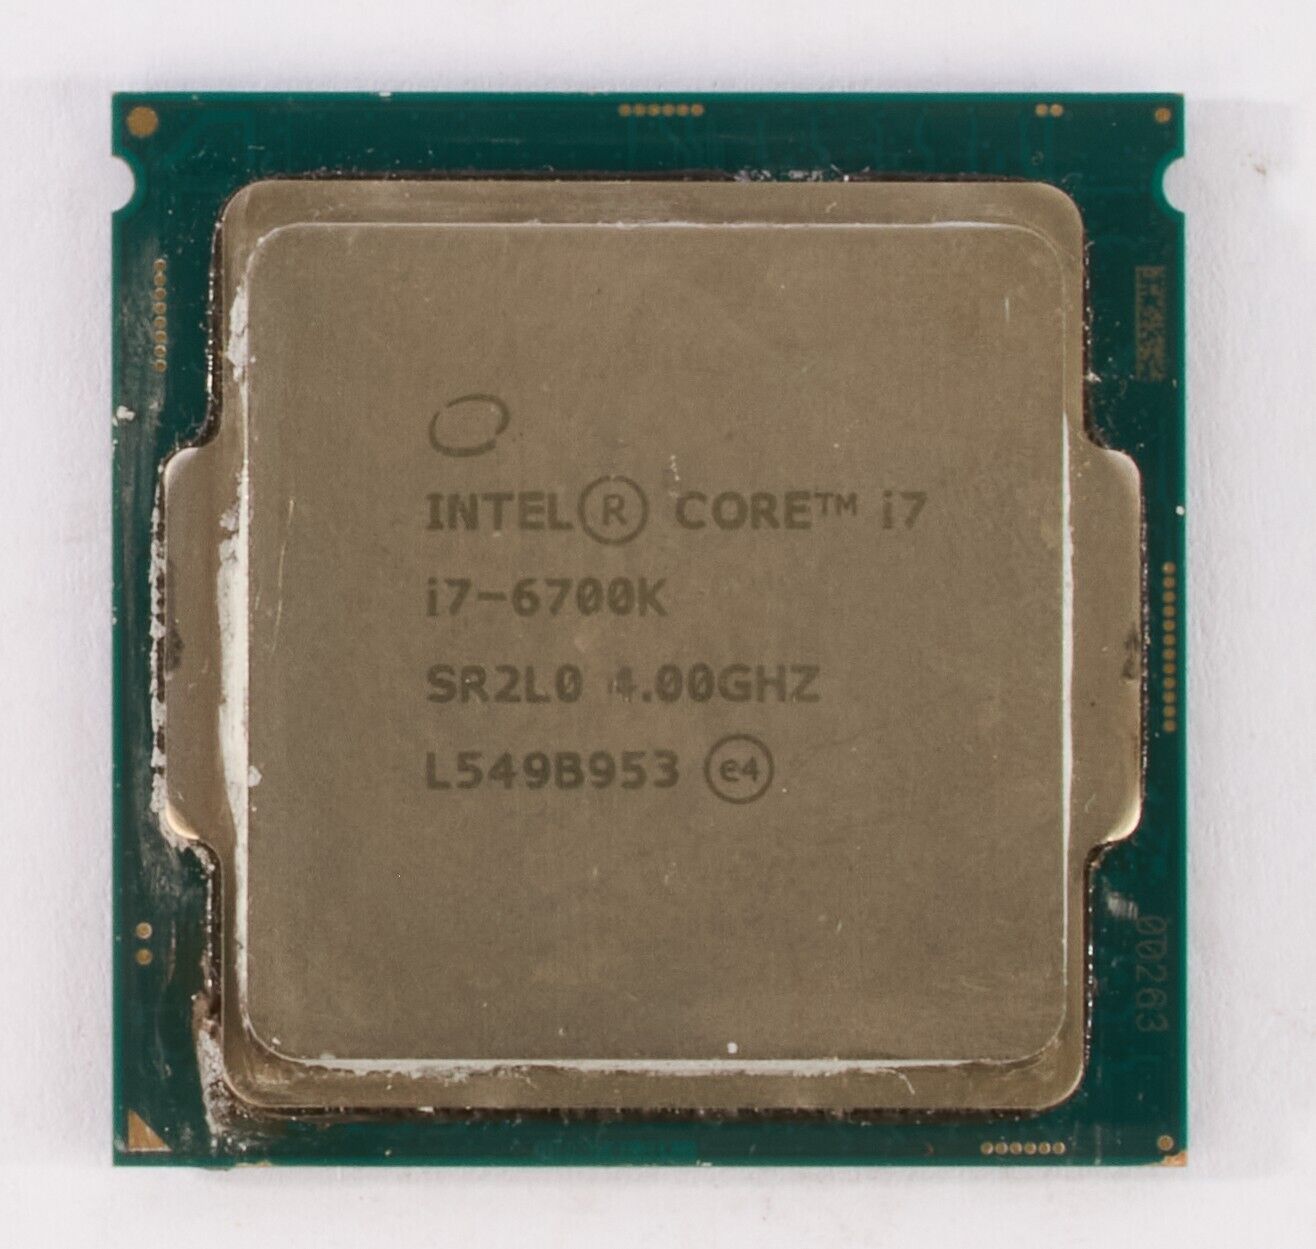 Intel Core i7-6700K SR2L0 4.0GHz Quad-Core 8M LGA 1151 CPU